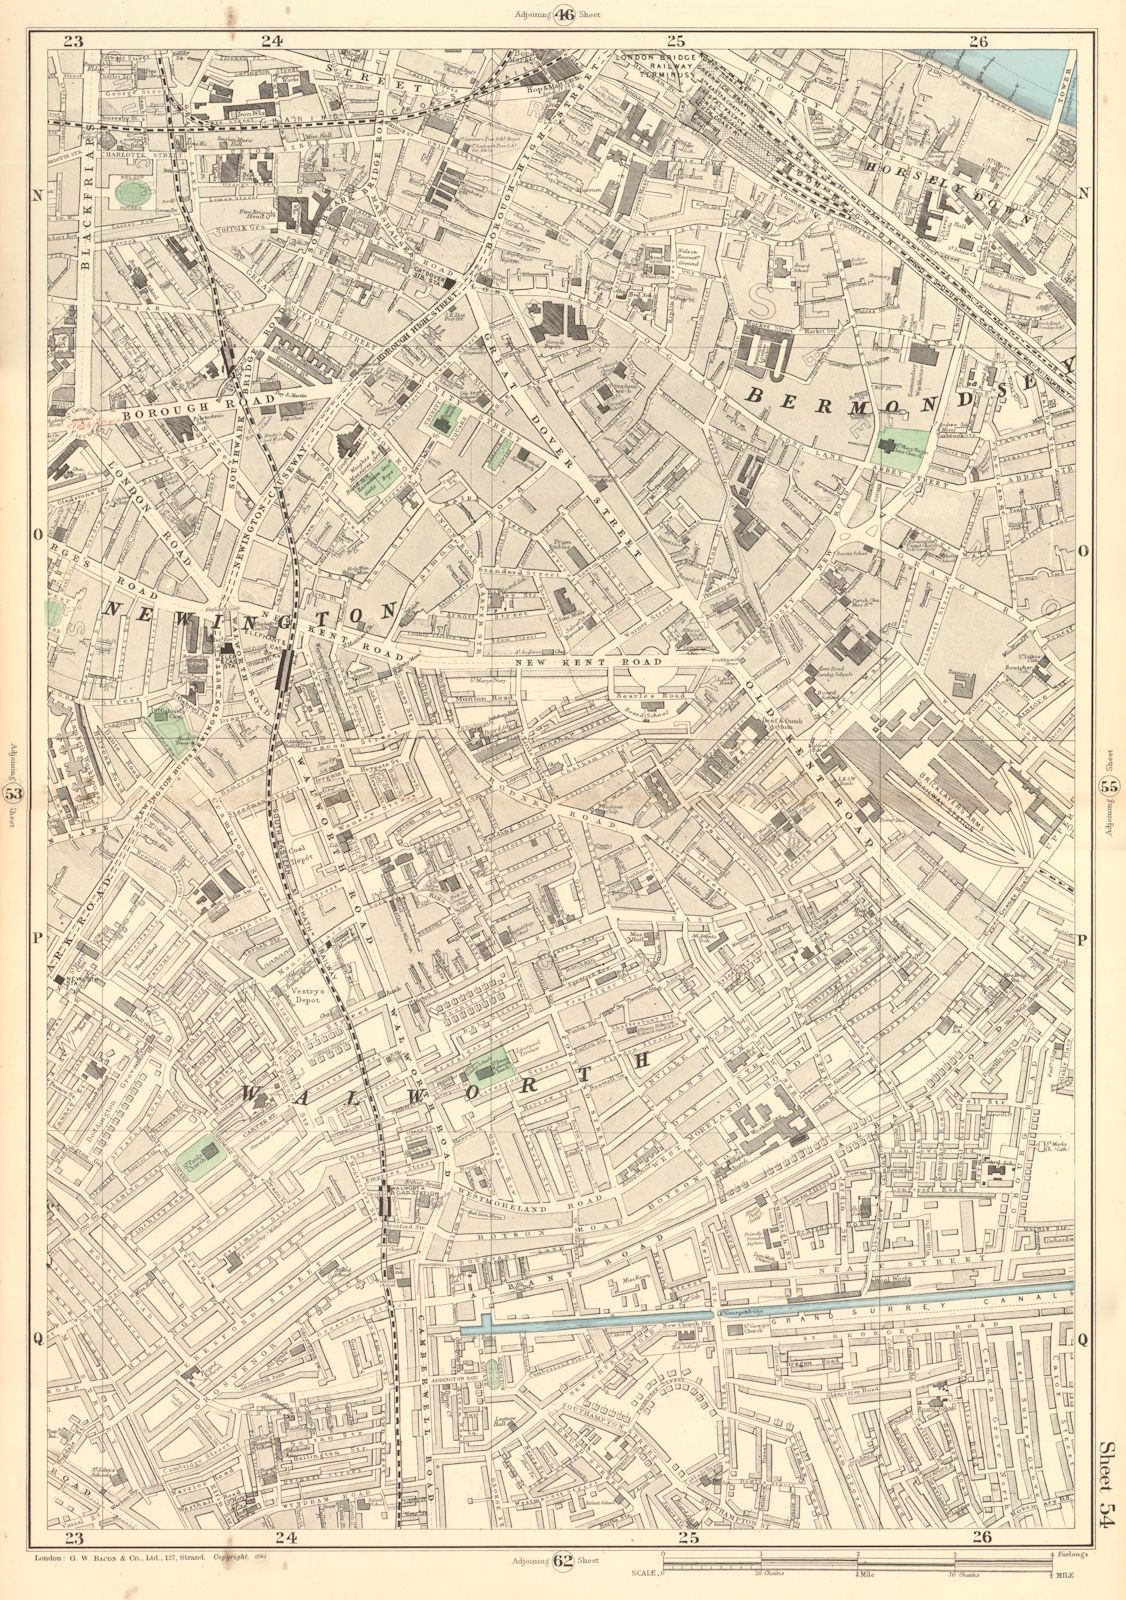 BERMONDSEY Newington Elephant & Castle Borough London Bridge Southwark 1903 map